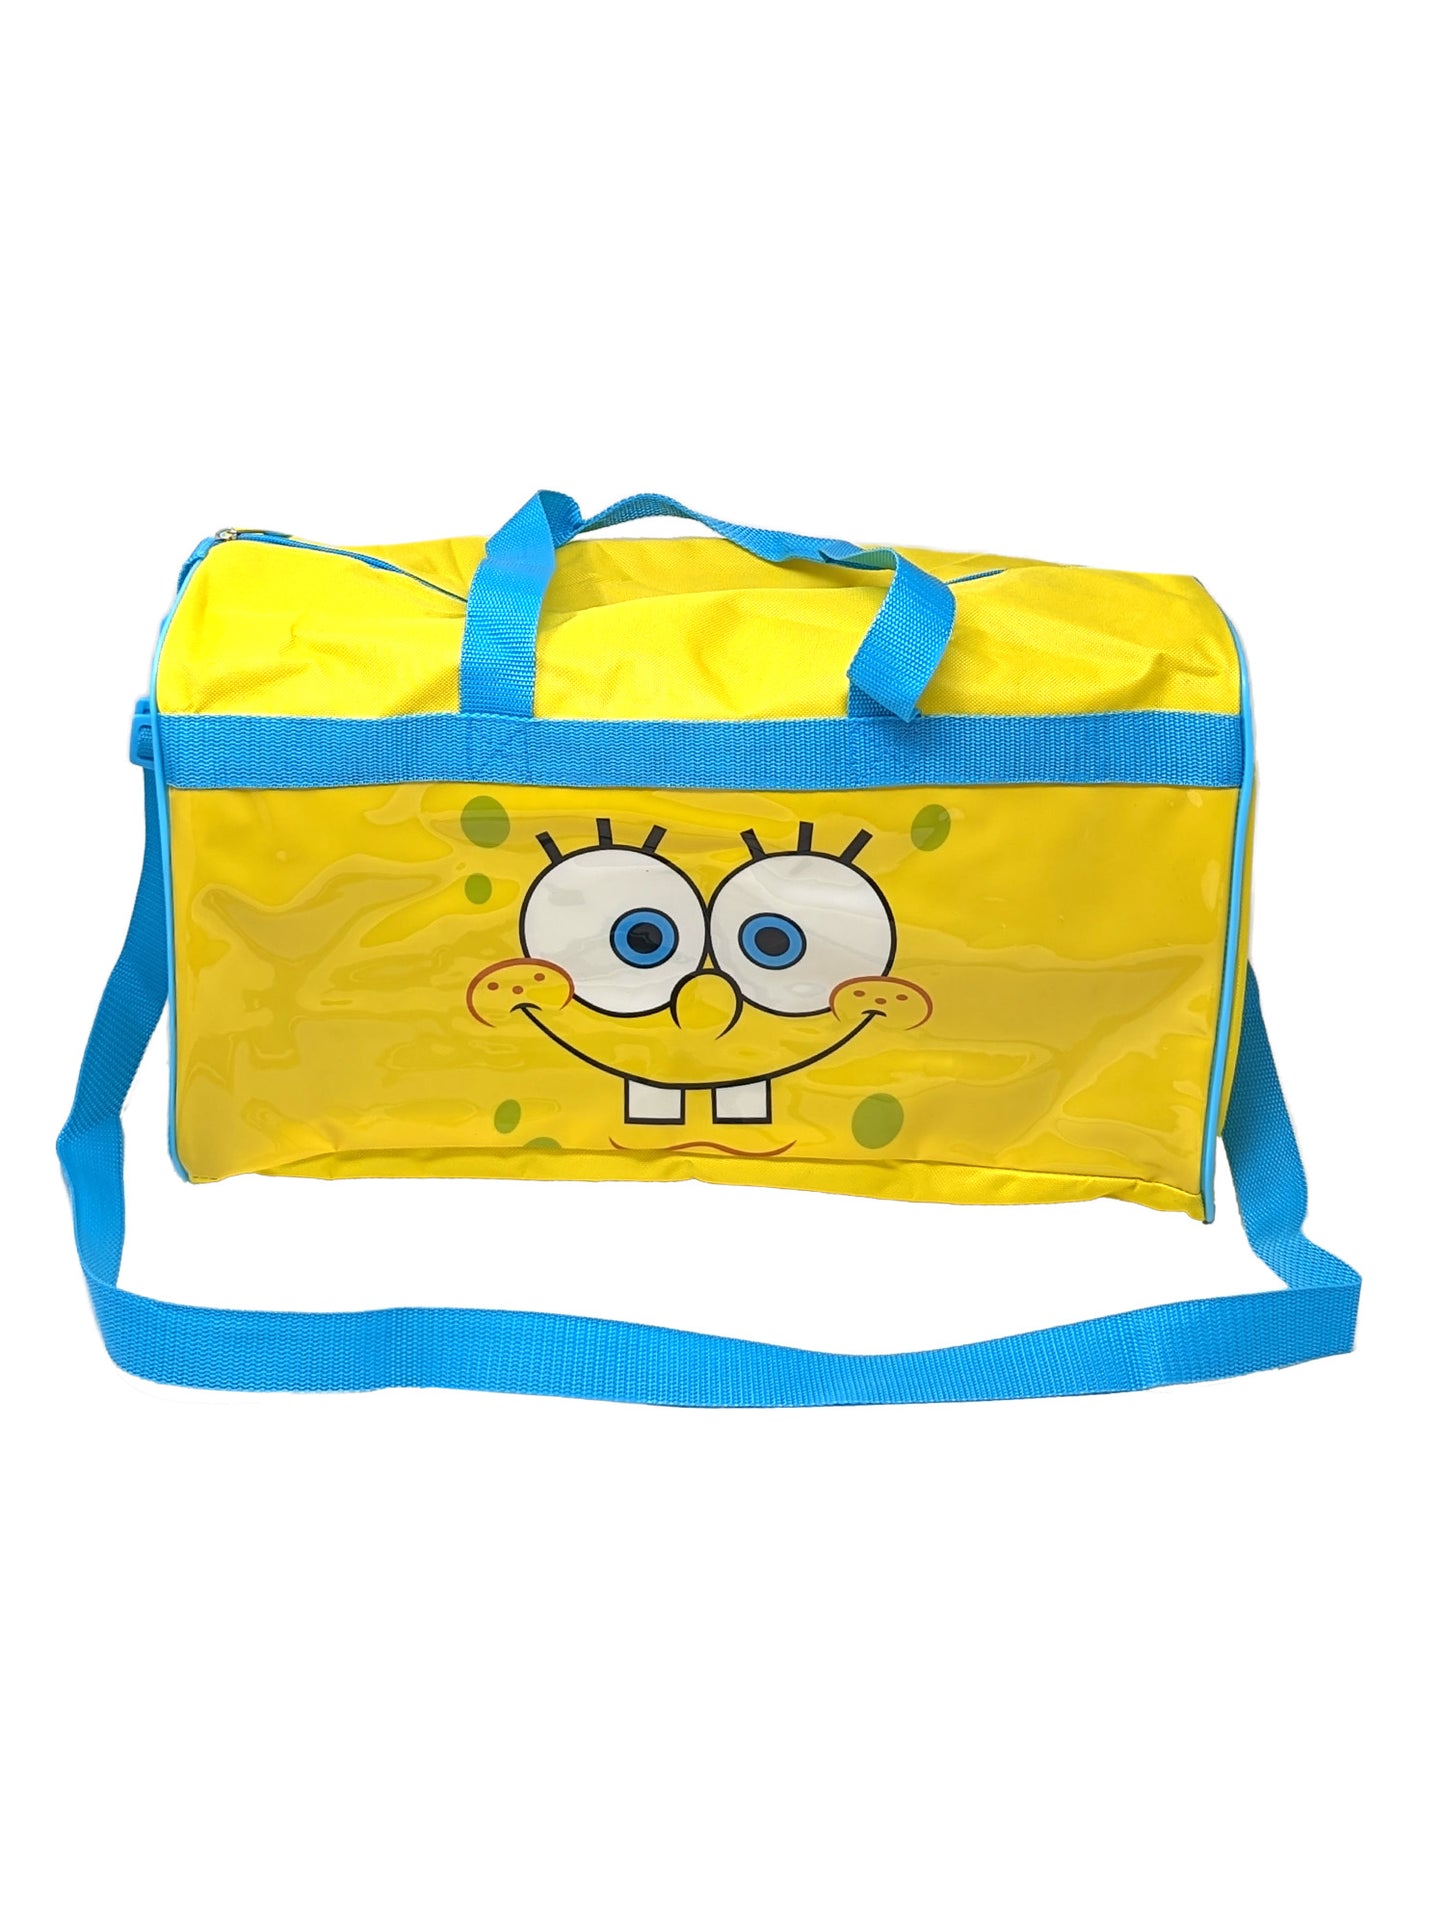 Spongebob Squarepants Duffel Bag Carry-On w/ Zipper Mesh Travel Pouch Set